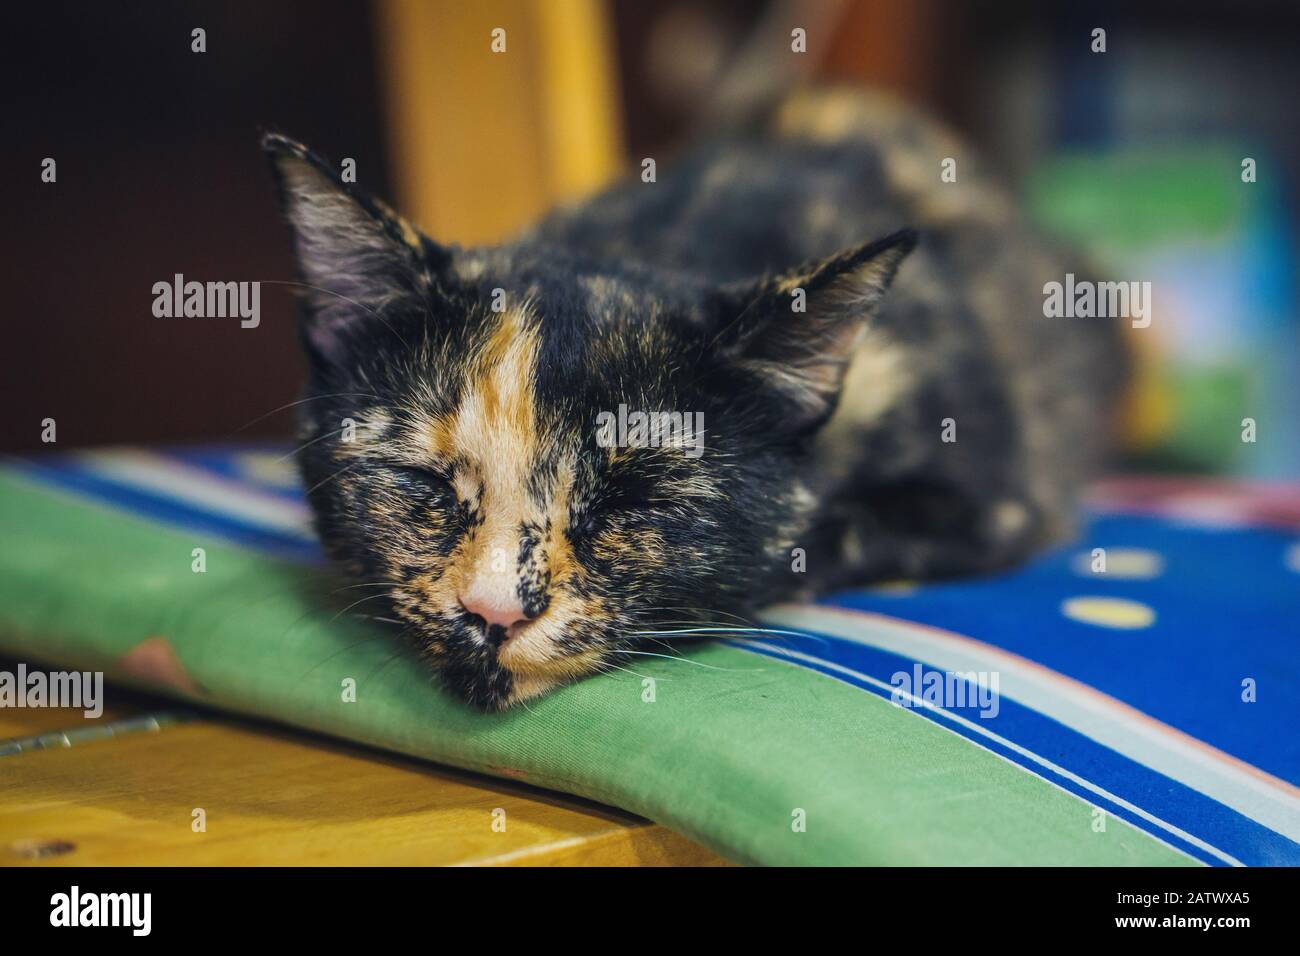 Sleeping funny looking cat Stock Photo